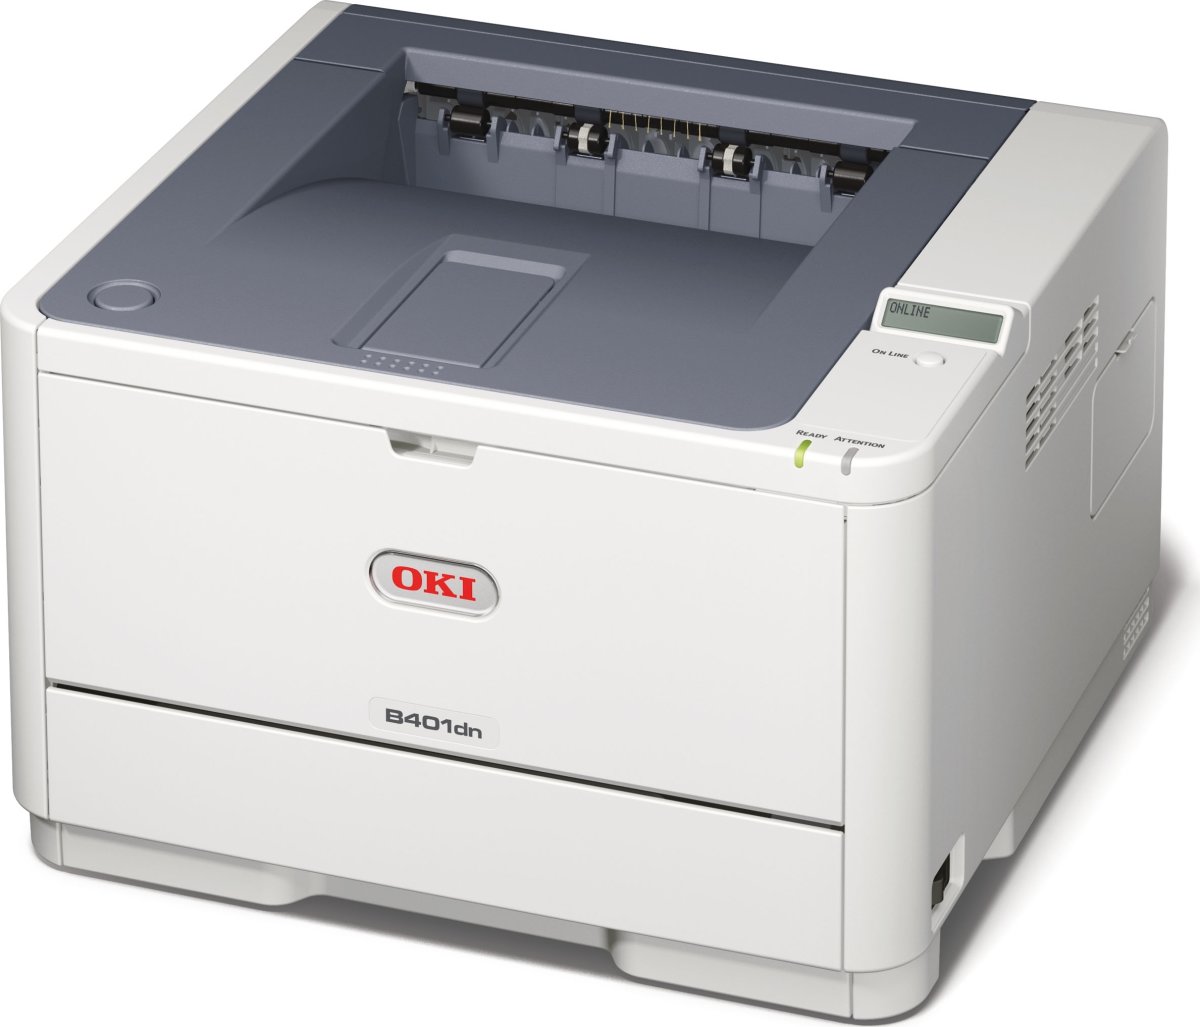 OKI B432dn sort/hvid laserprinter